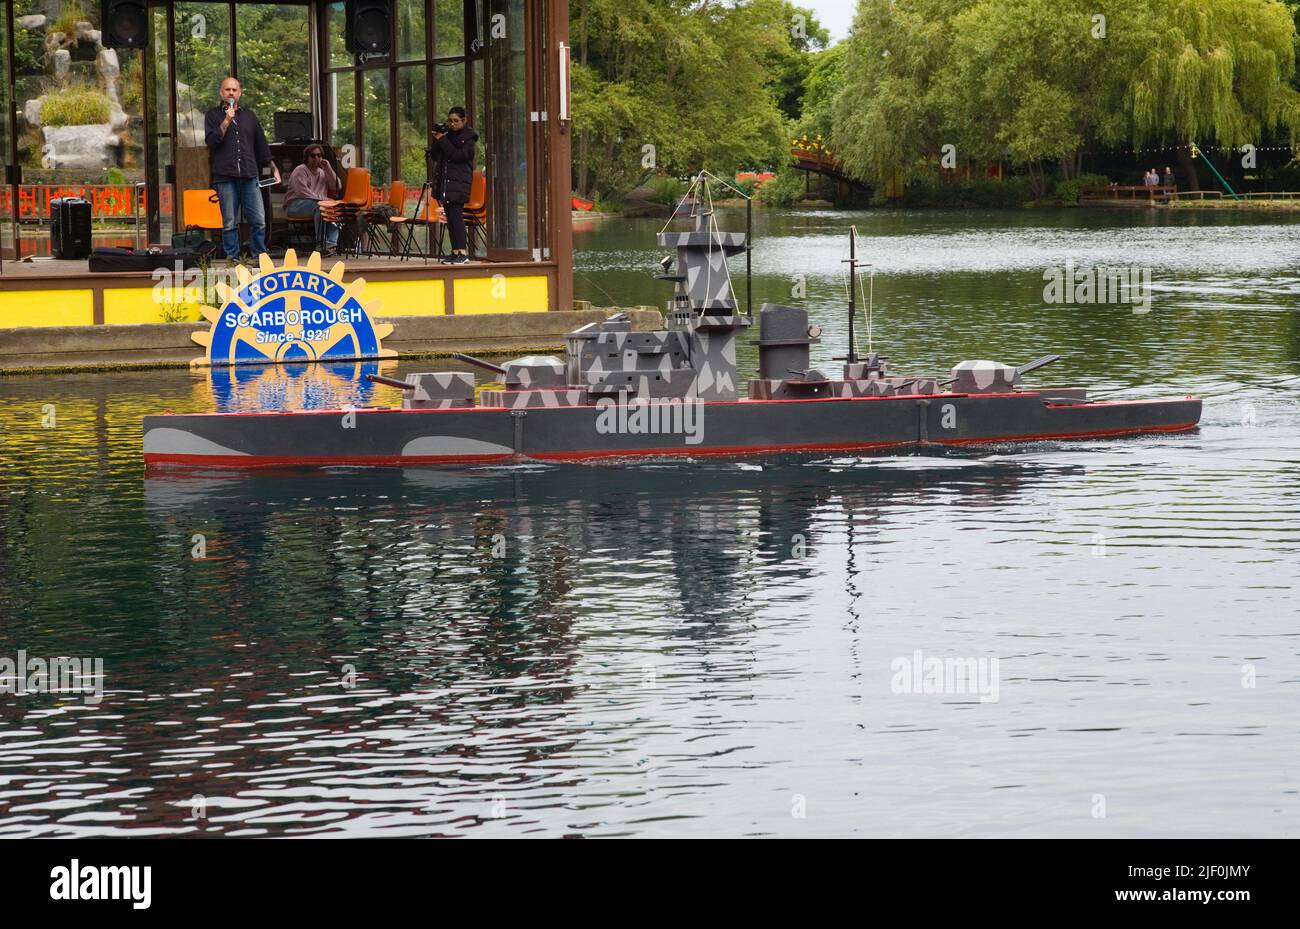 Model of German Battleship during River Plate naval battle presentation at Peasholm Park boating lake in Scarborough Stock Photo